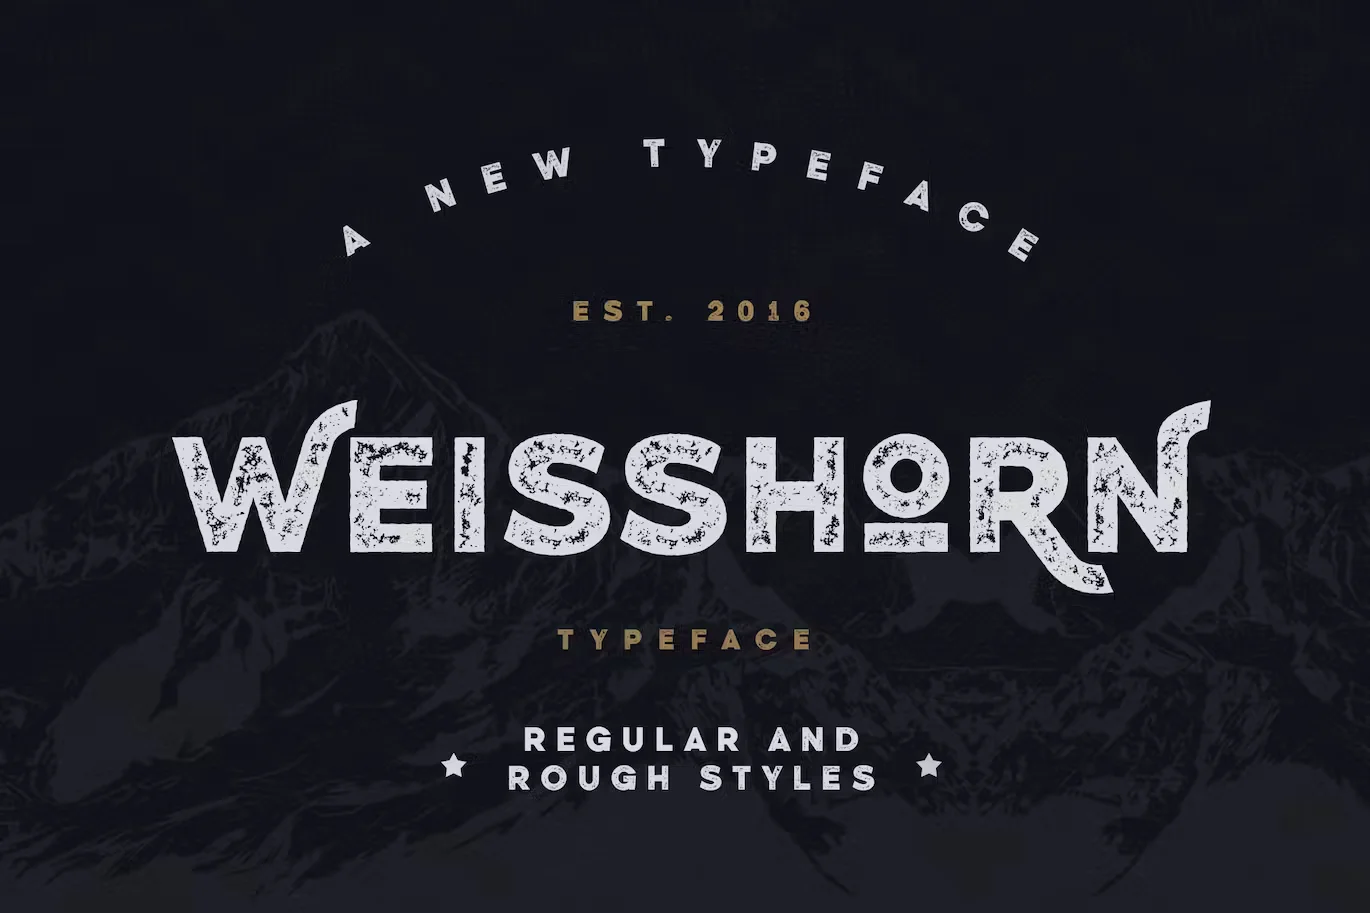 Weisshorn Typeface